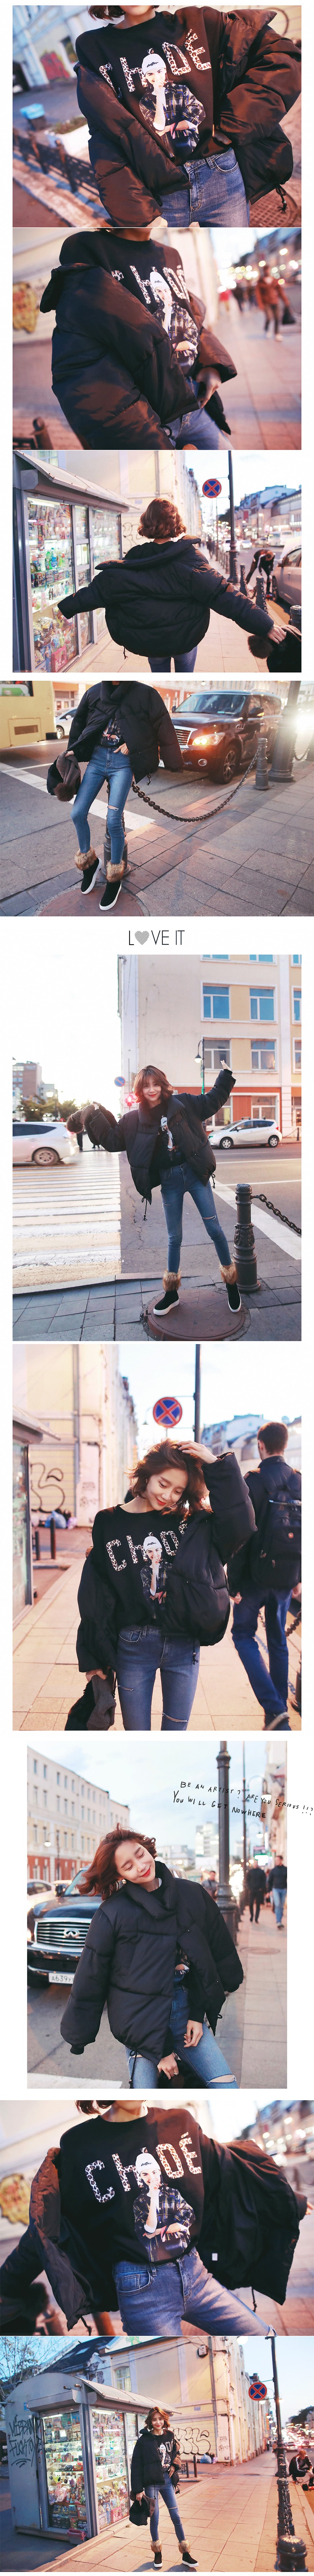 [KOREA] High-Collar Puffer Jacket  #Black One Size(S-M) [Free Shipping]